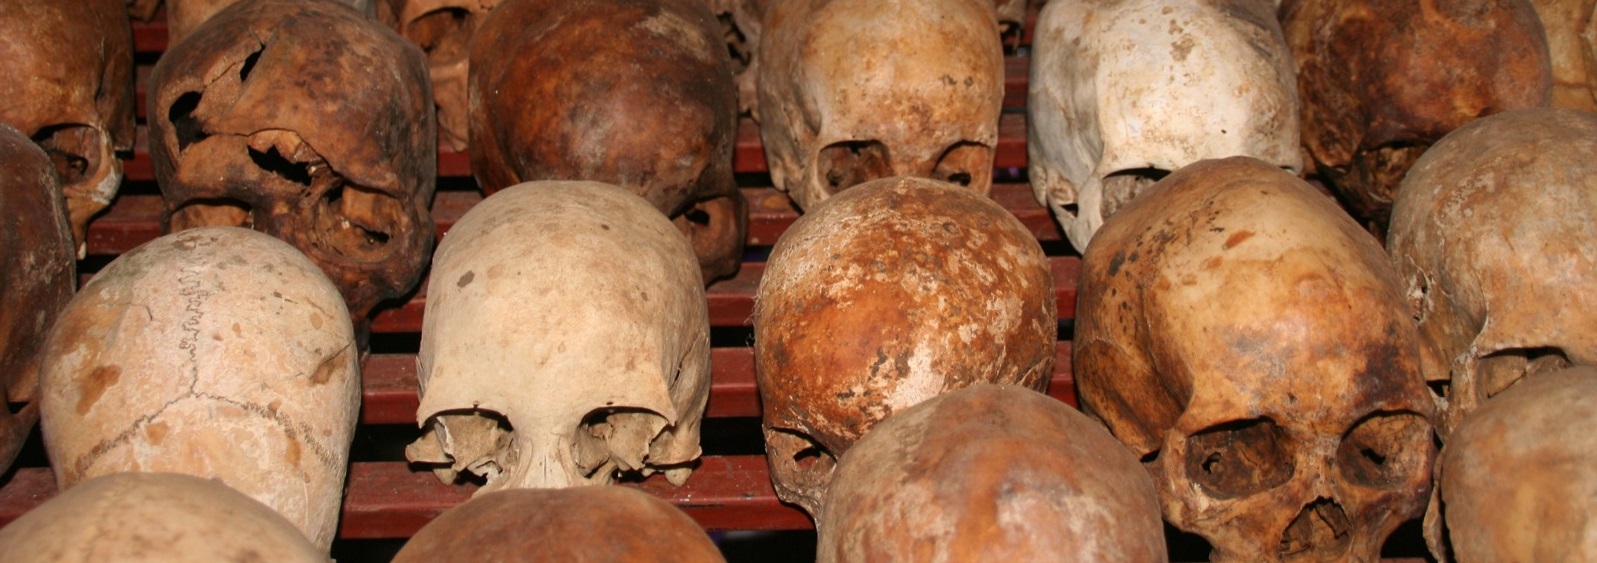 Scott Chacon / Rwanda genocide memorial